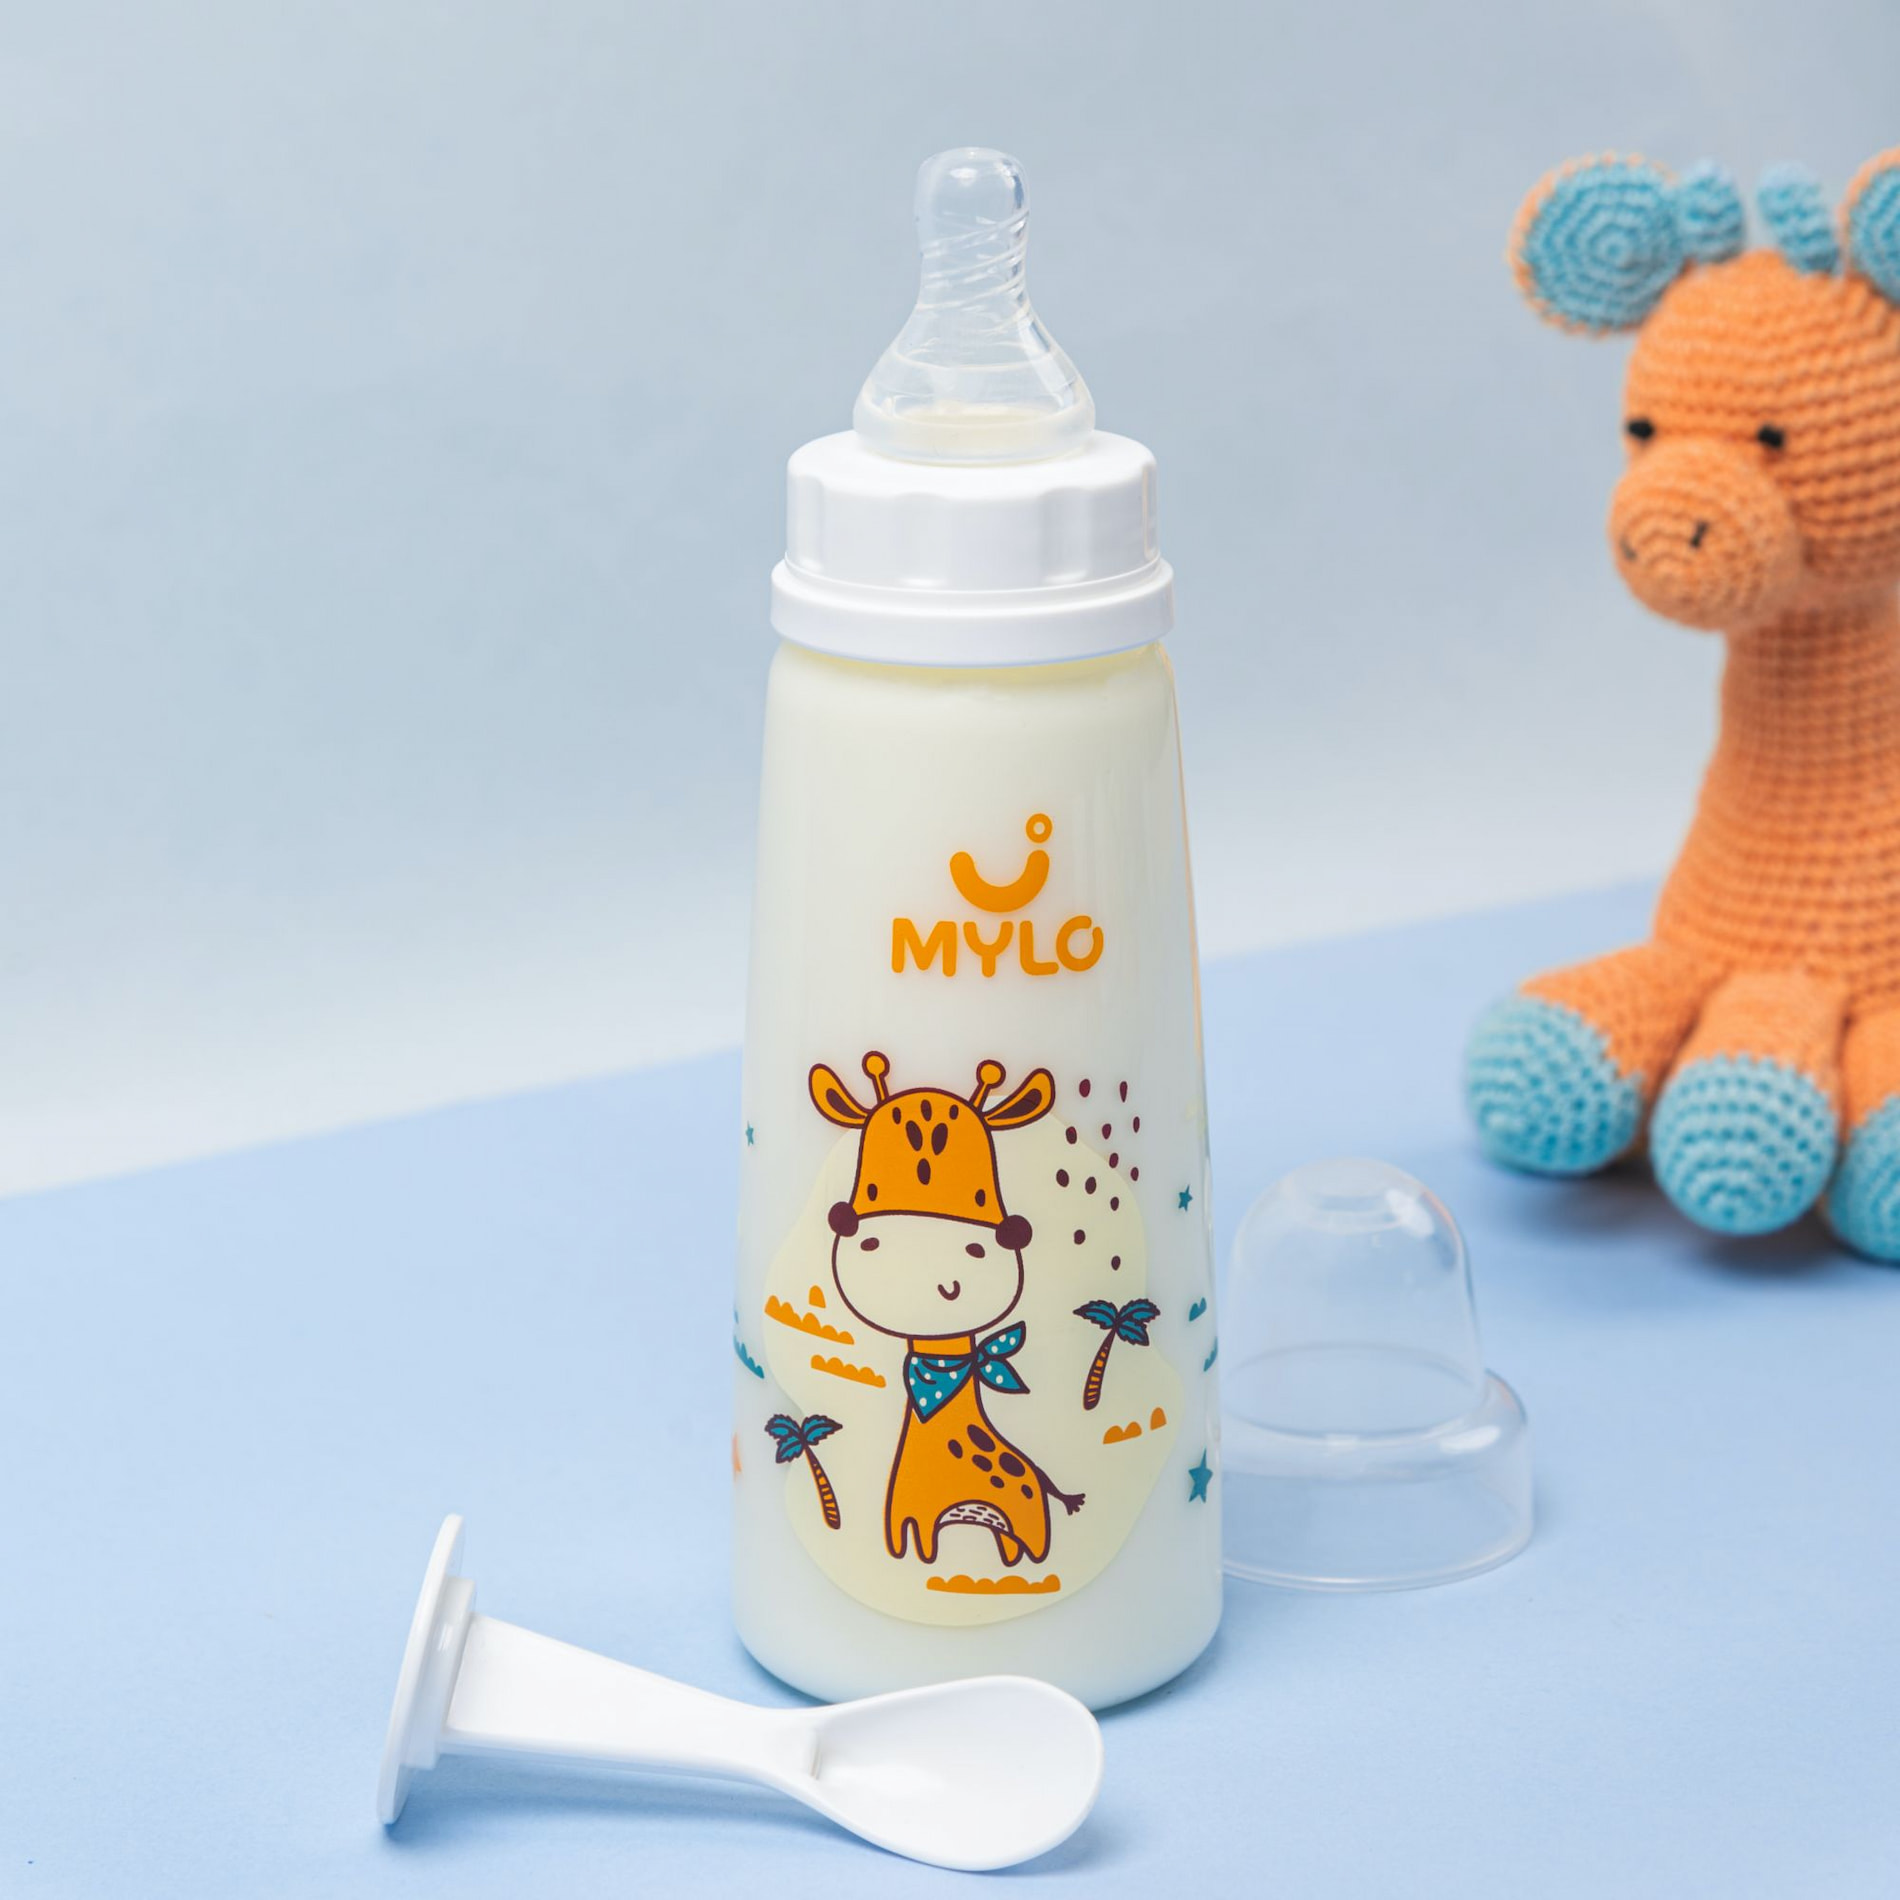 Mylo Feels Natural Baby Bottle – 250ml - BPA Free with Anti-Colic Nipple (Giraffe)